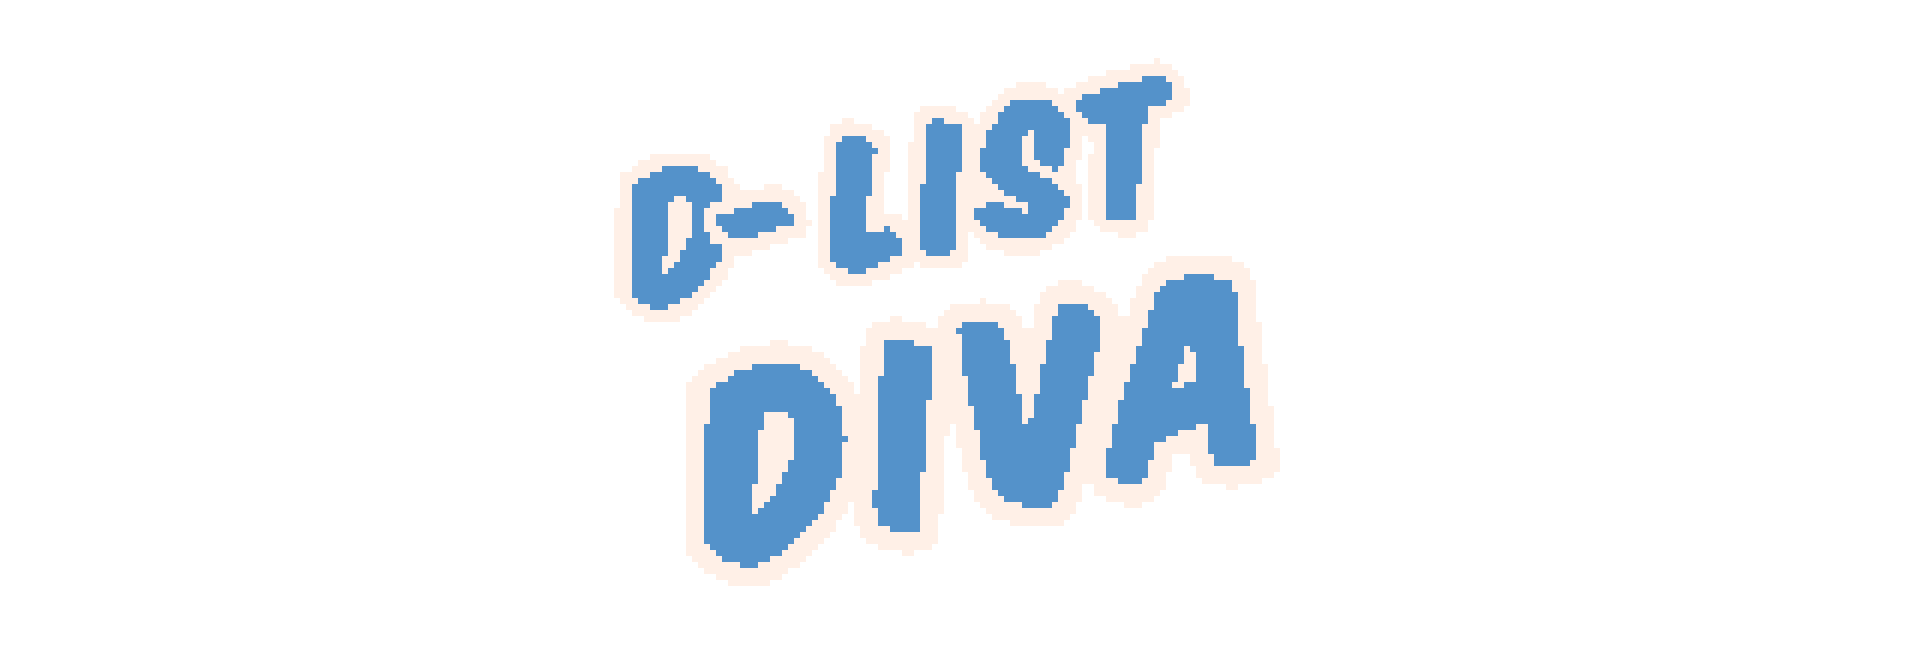 D-List Diva